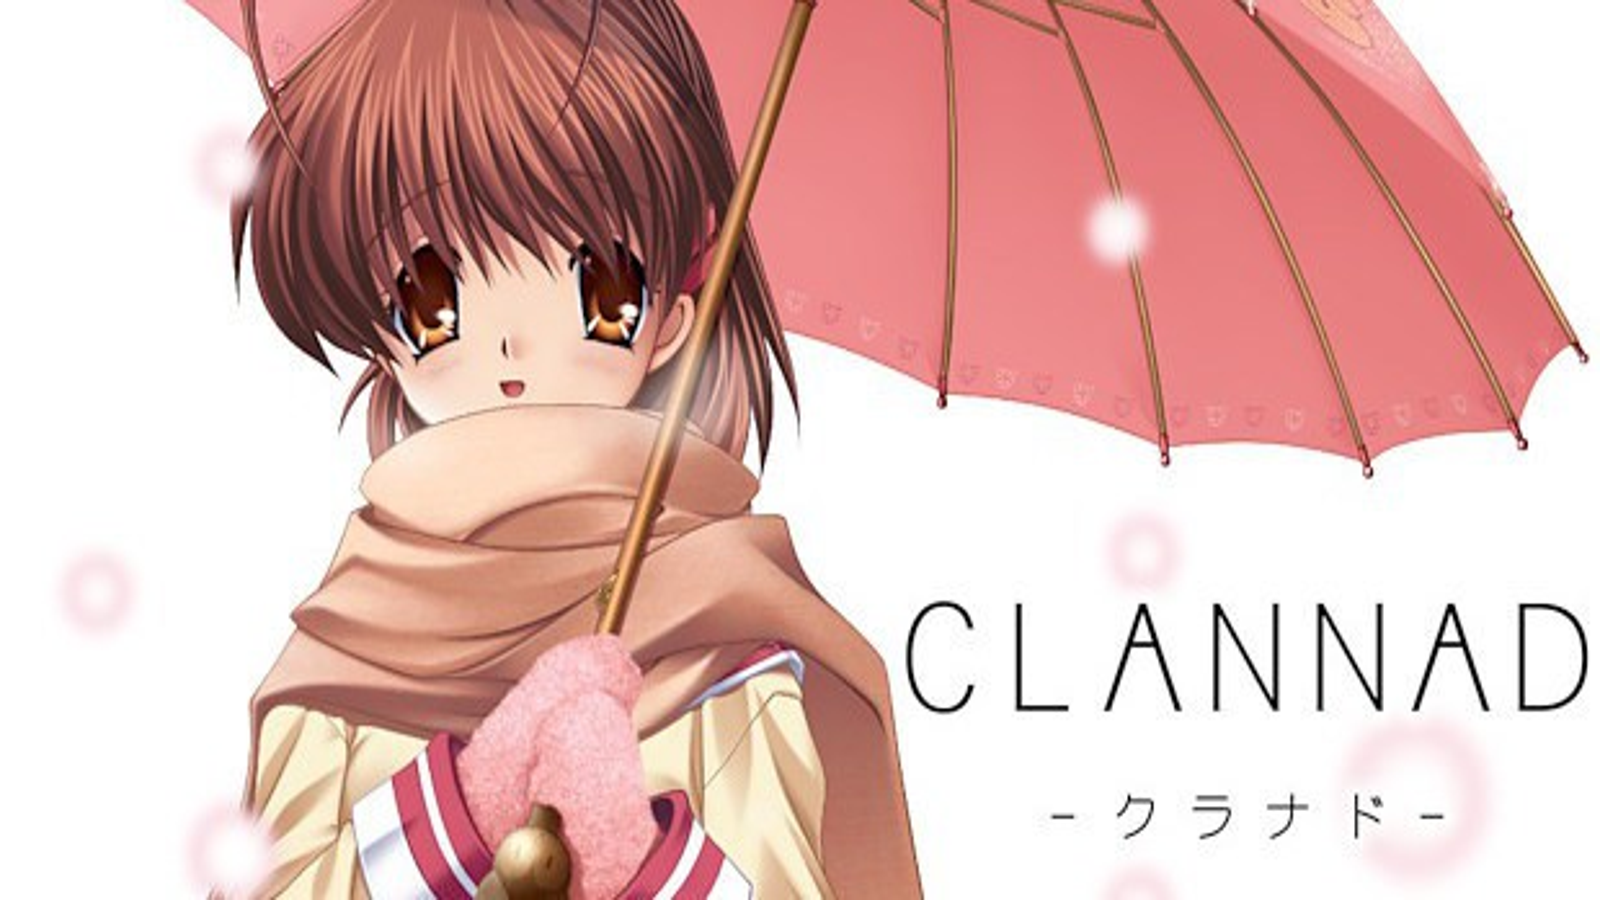 CLANNAD (Visual Novel) - TV Tropes